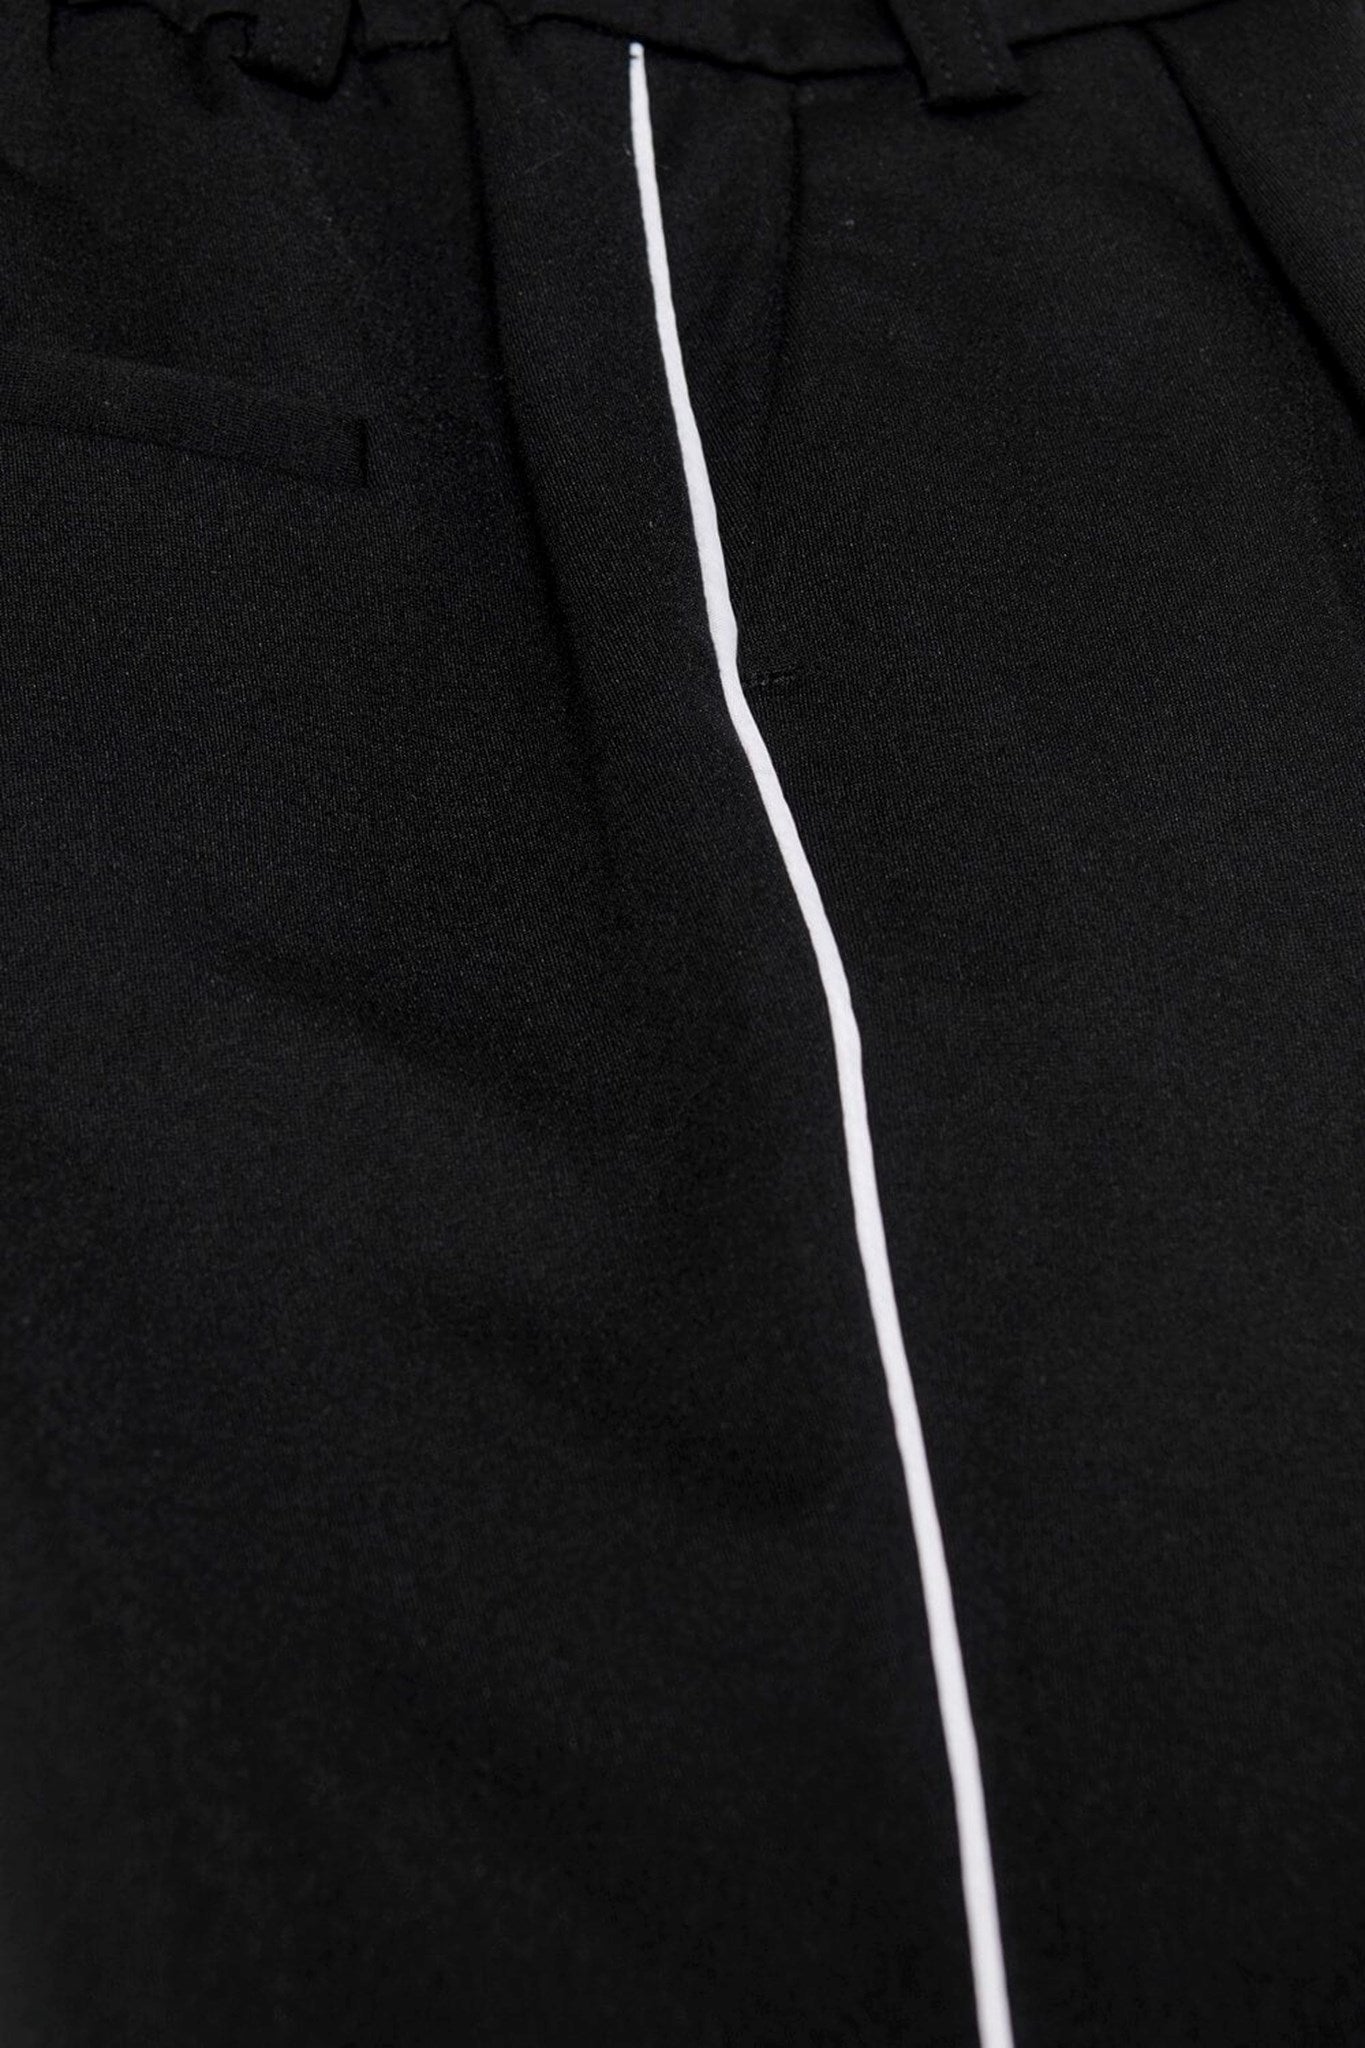 Poptrash trousers (kids) - Black with white stripe - Kids Only - Black 5